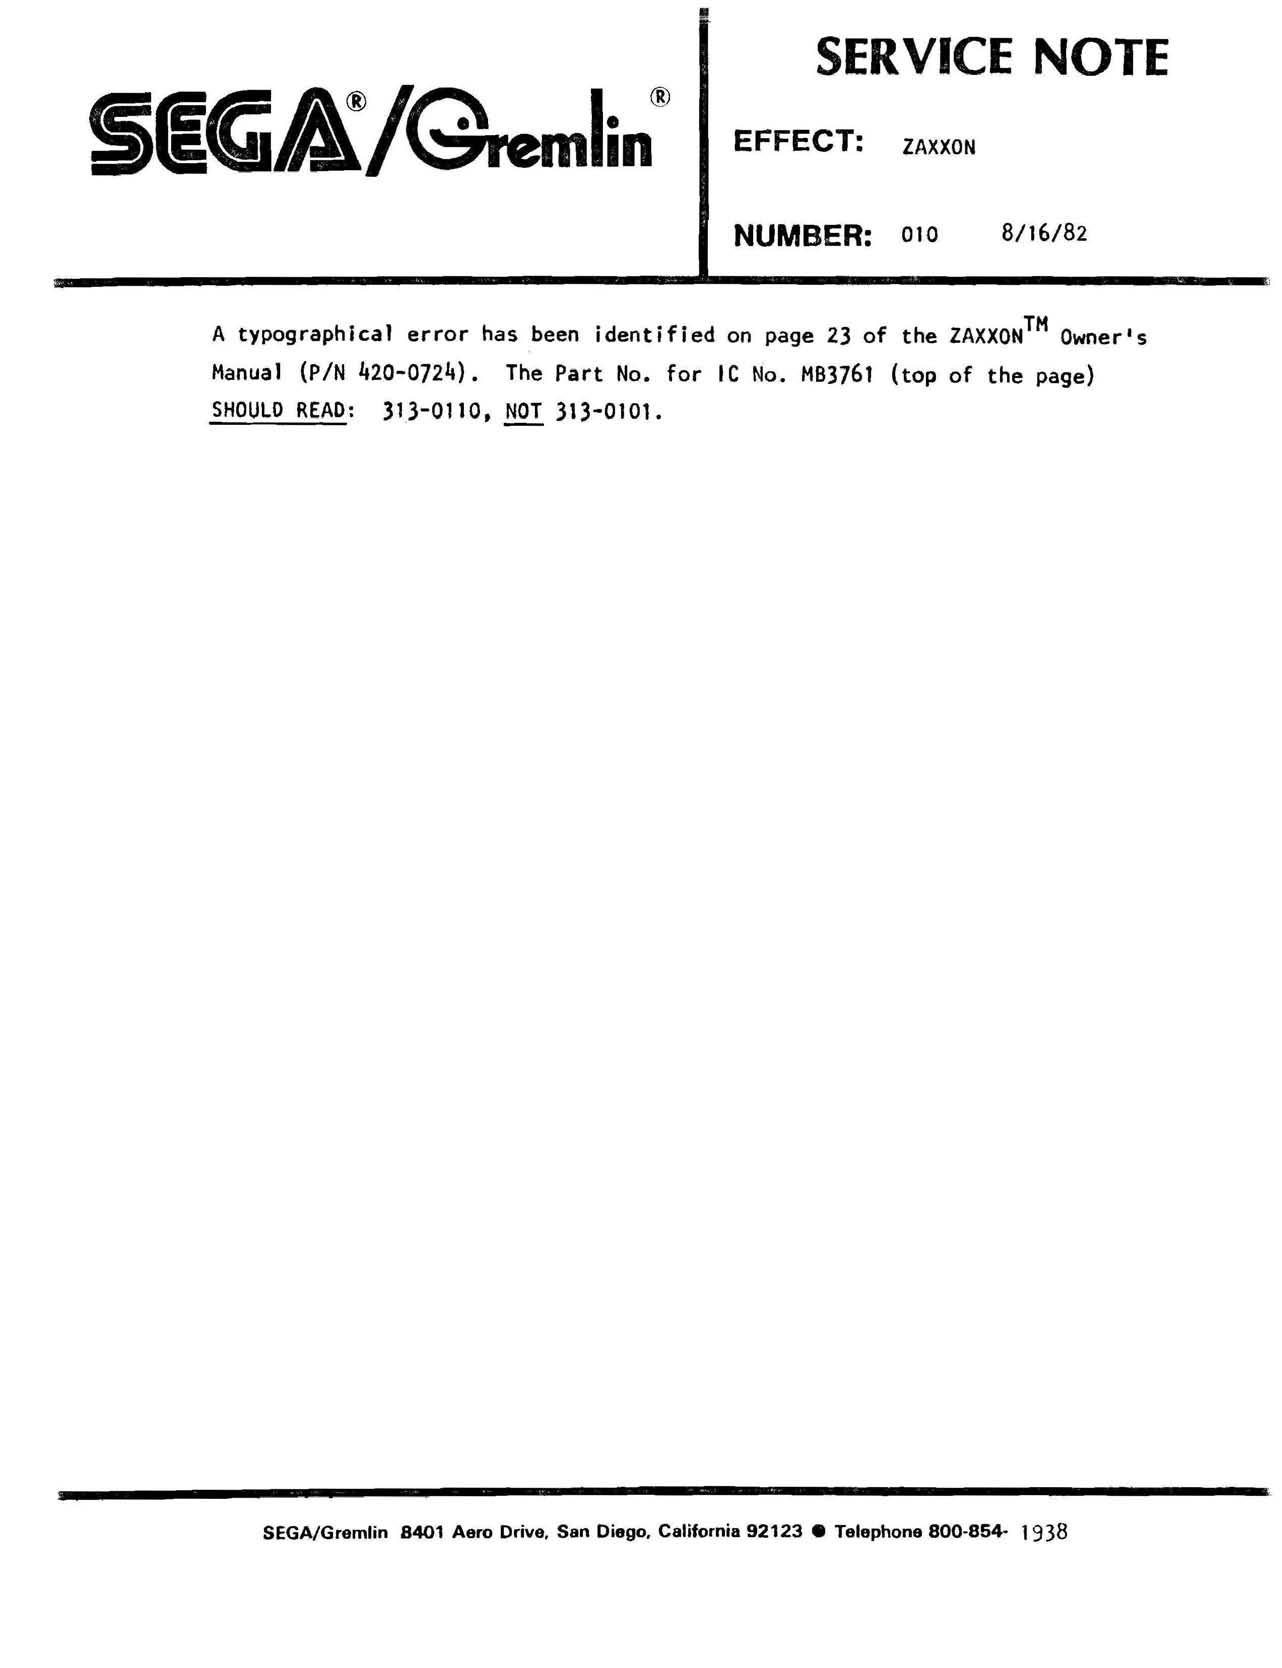 Zaxxon Service Note 010 (08-16-1982)